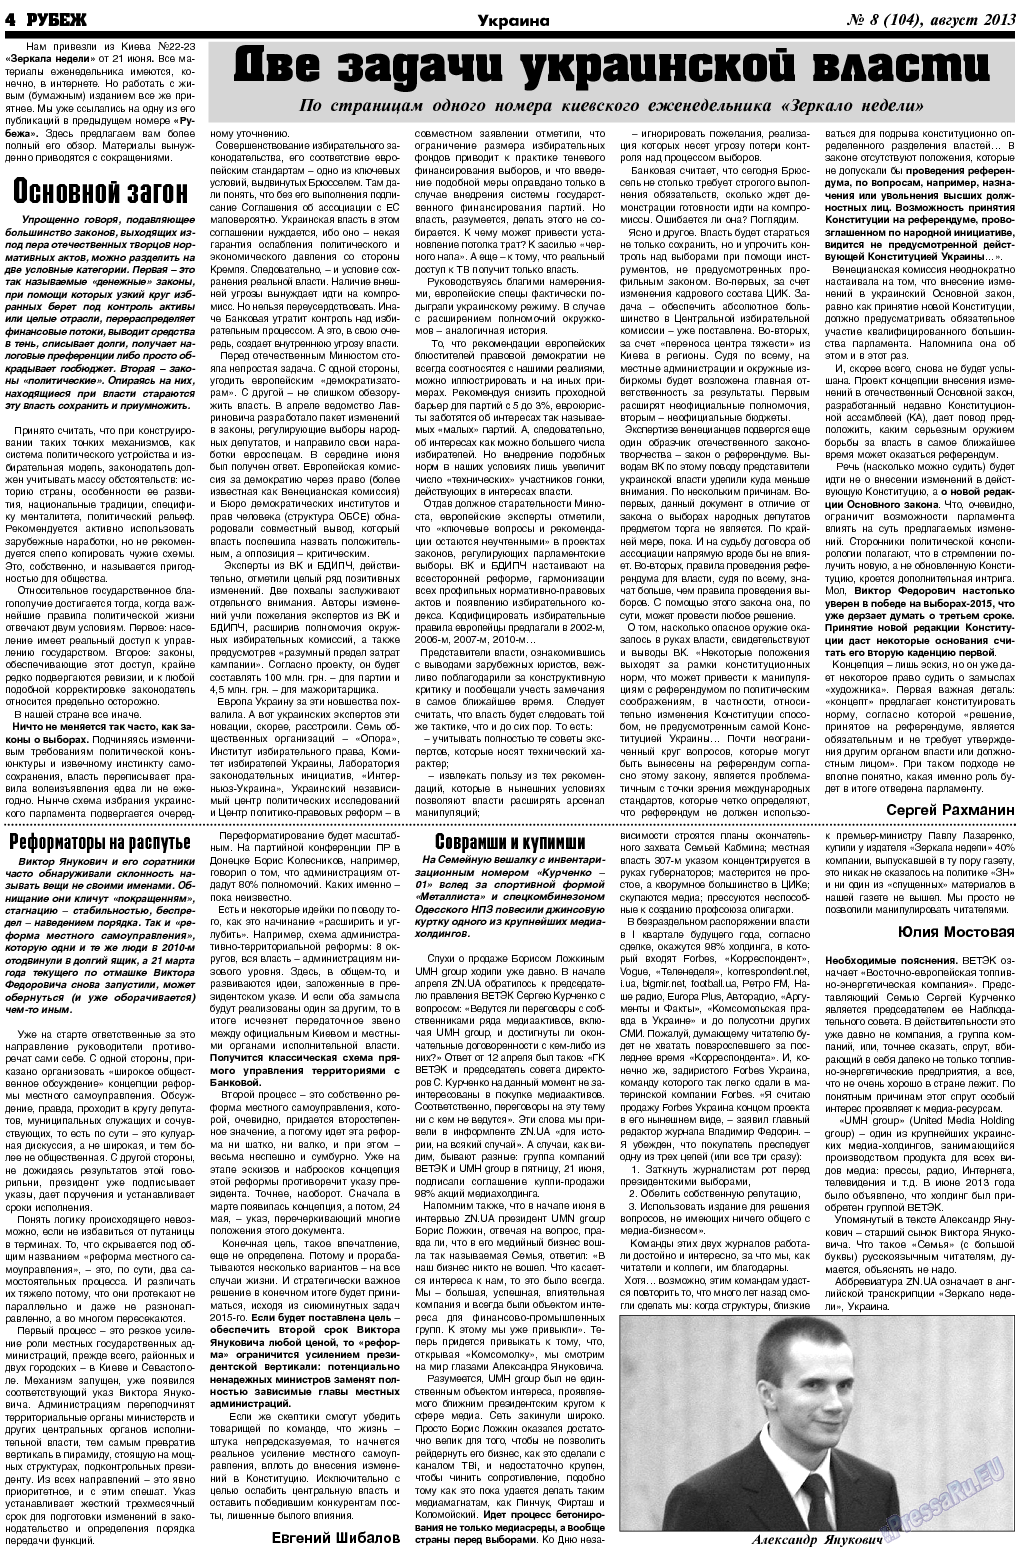 Рубеж, газета. 2013 №8 стр.4